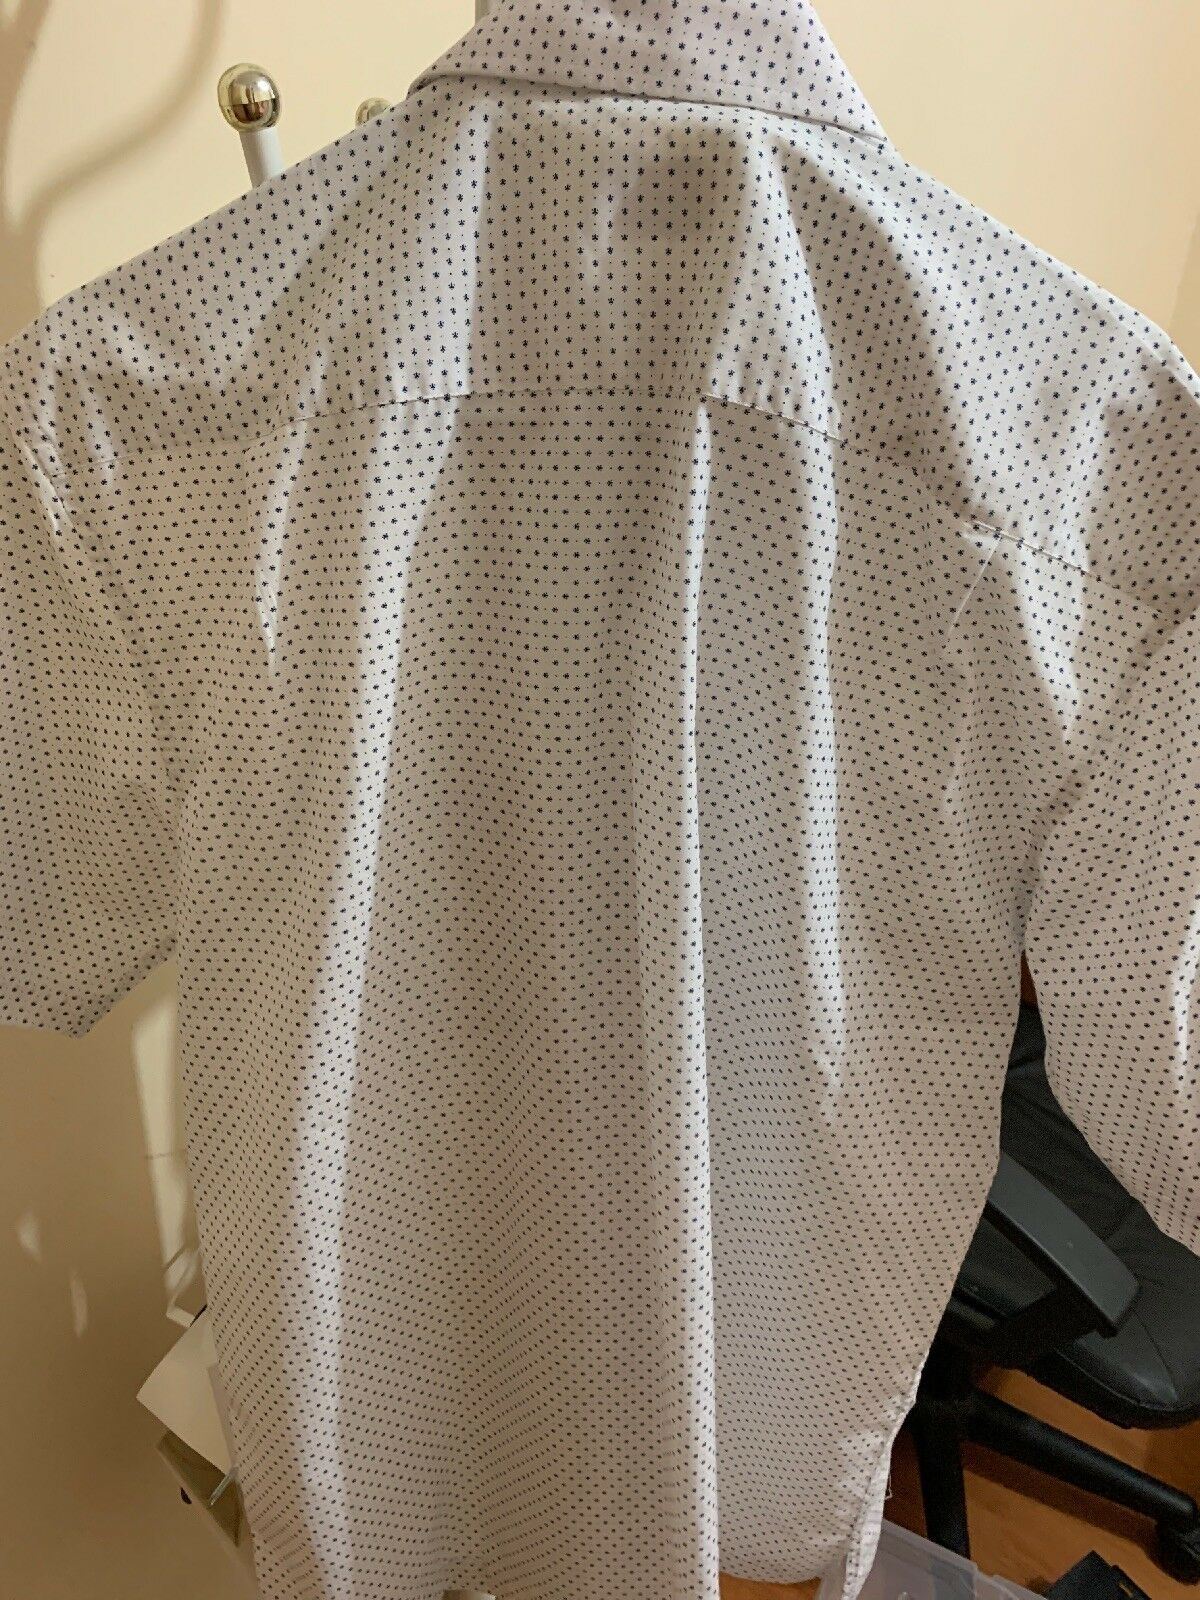 Tix regular Fit Shirt Sleeve Shirt Large Men's Size 39-40